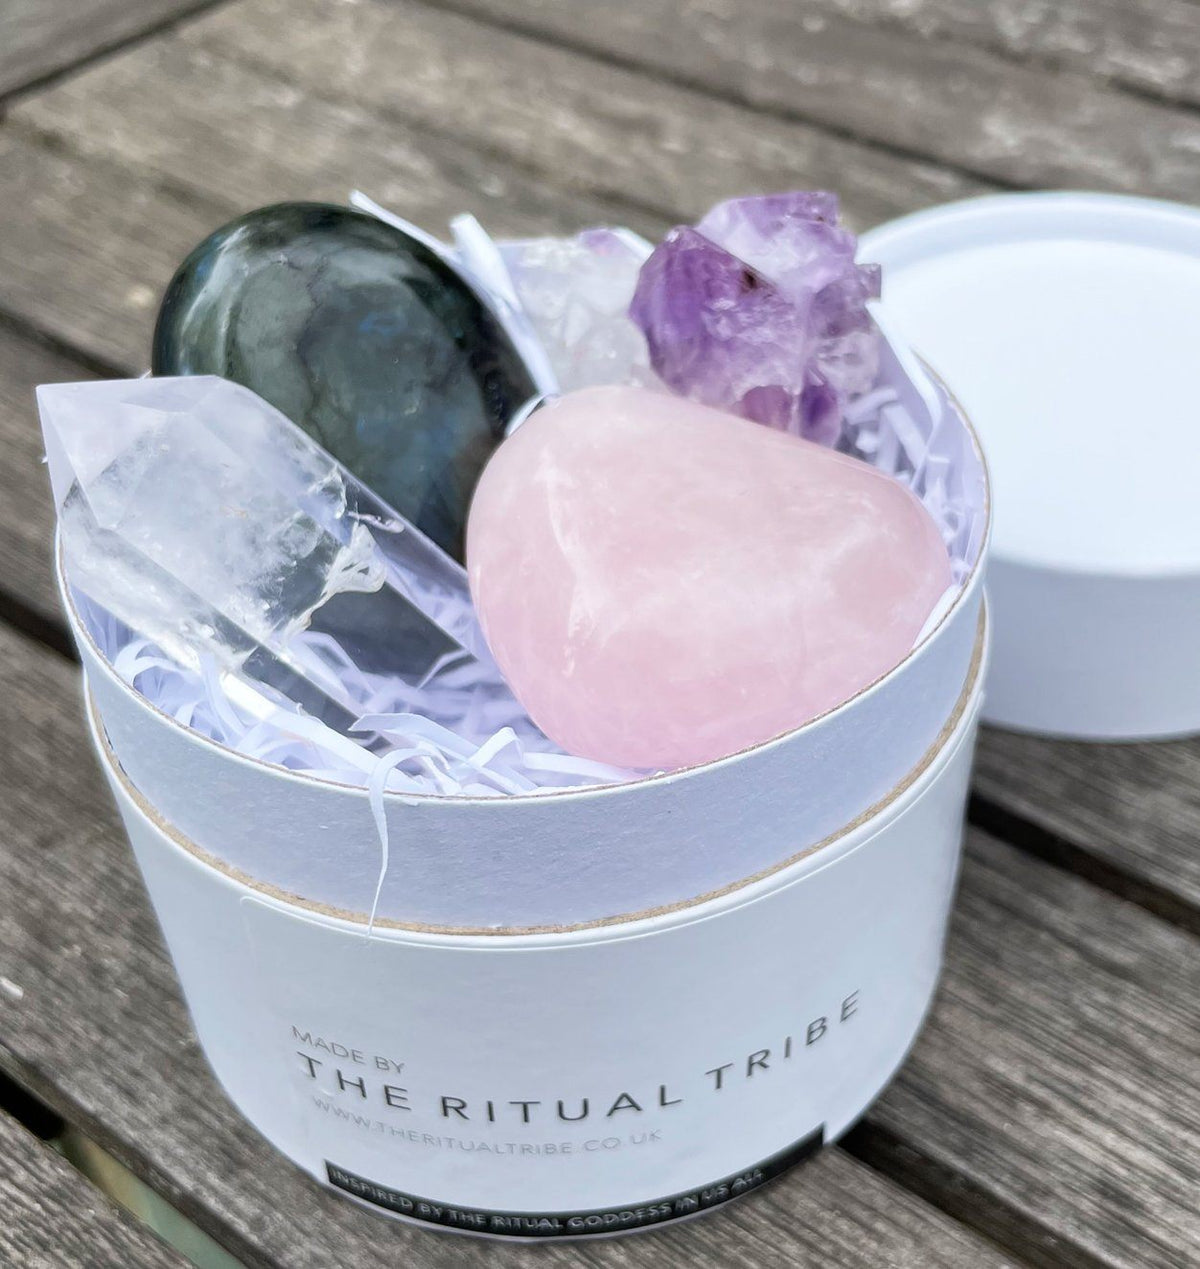 Spiritual Connection Crystal Ritual Kit The Ritual Tribe 